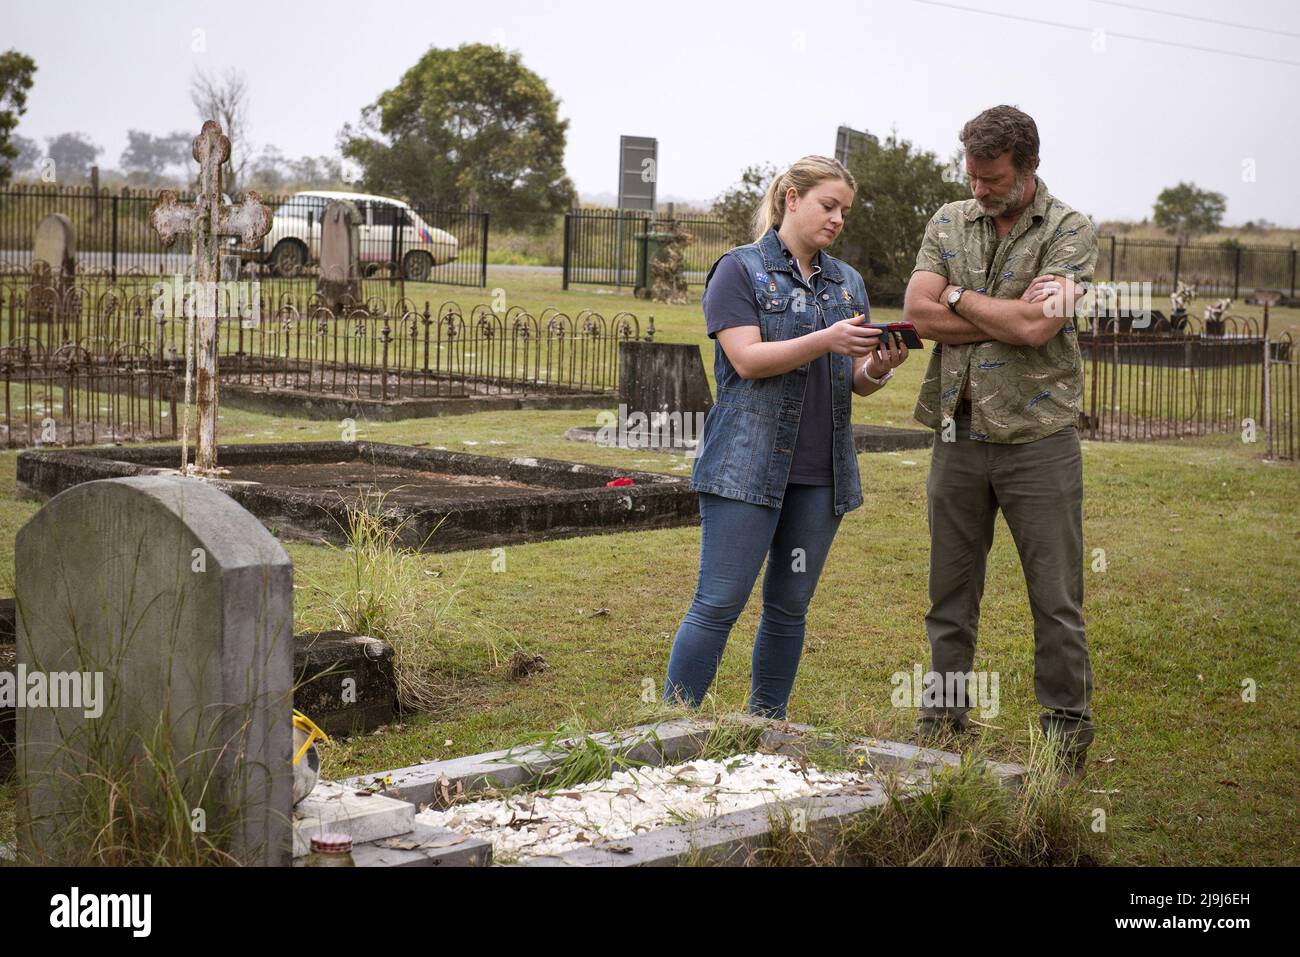 Graveyard (TV Series 2022) - IMDb